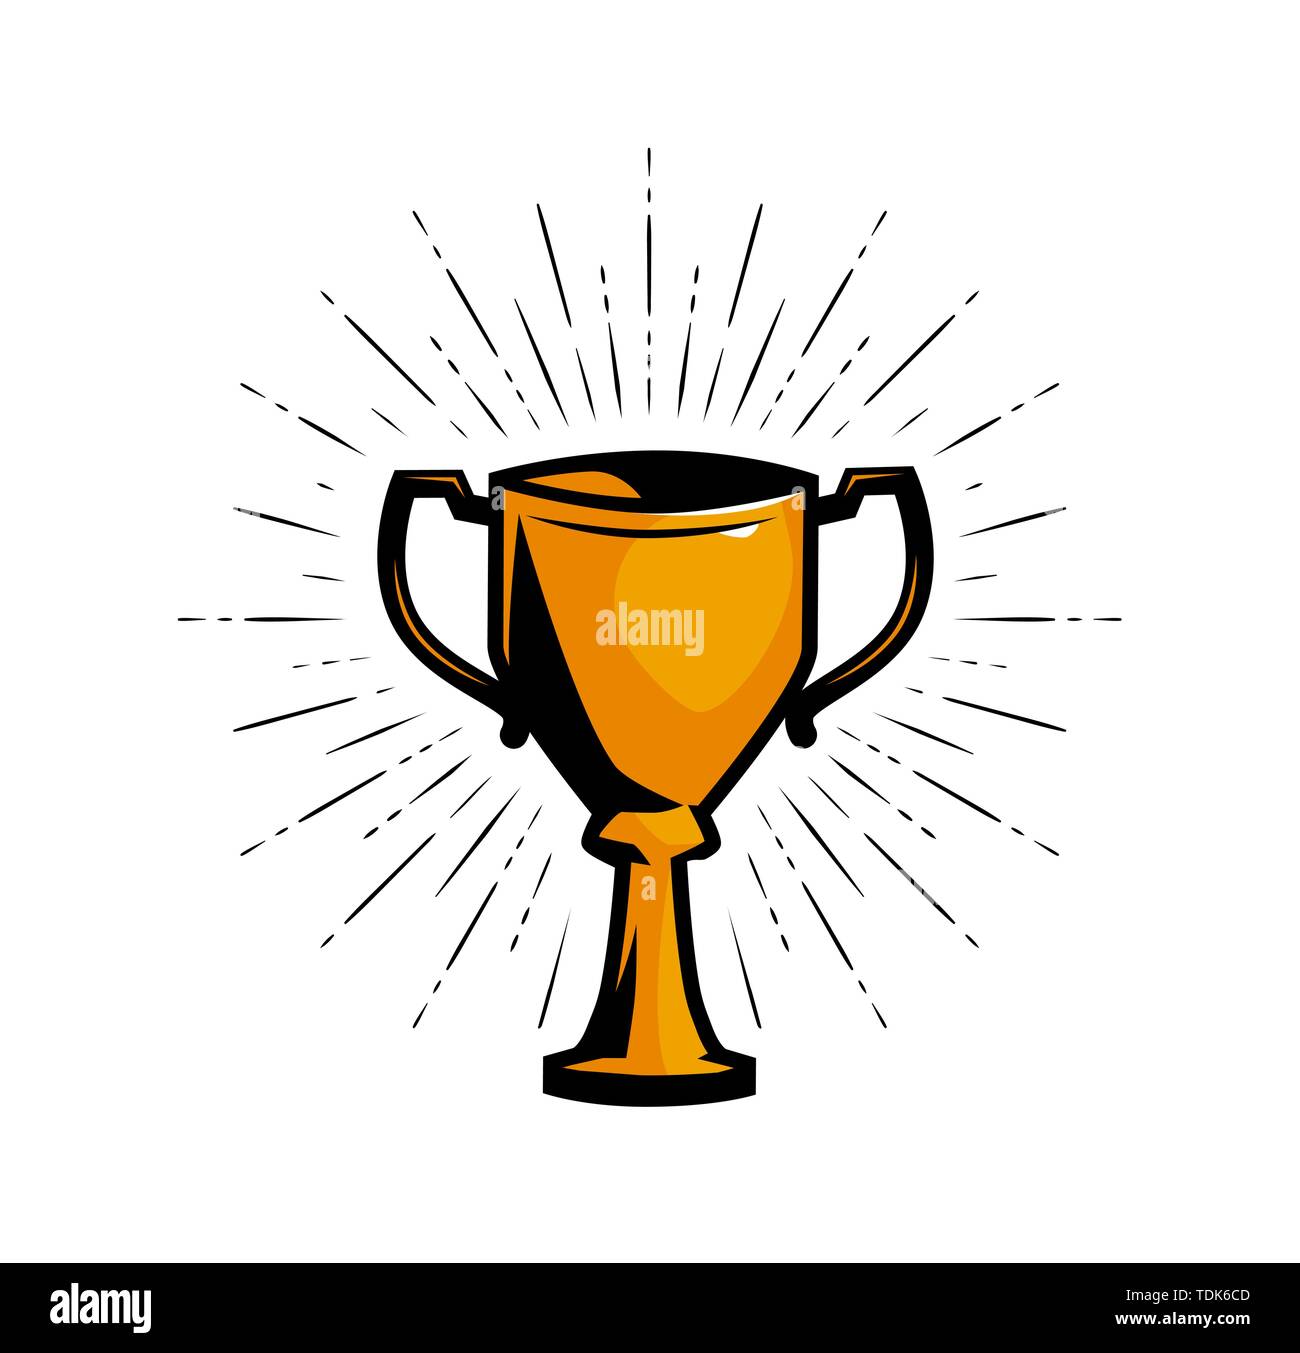 Gold Cup Sieger, Achievement Award Vector Illustration Stock Vektor